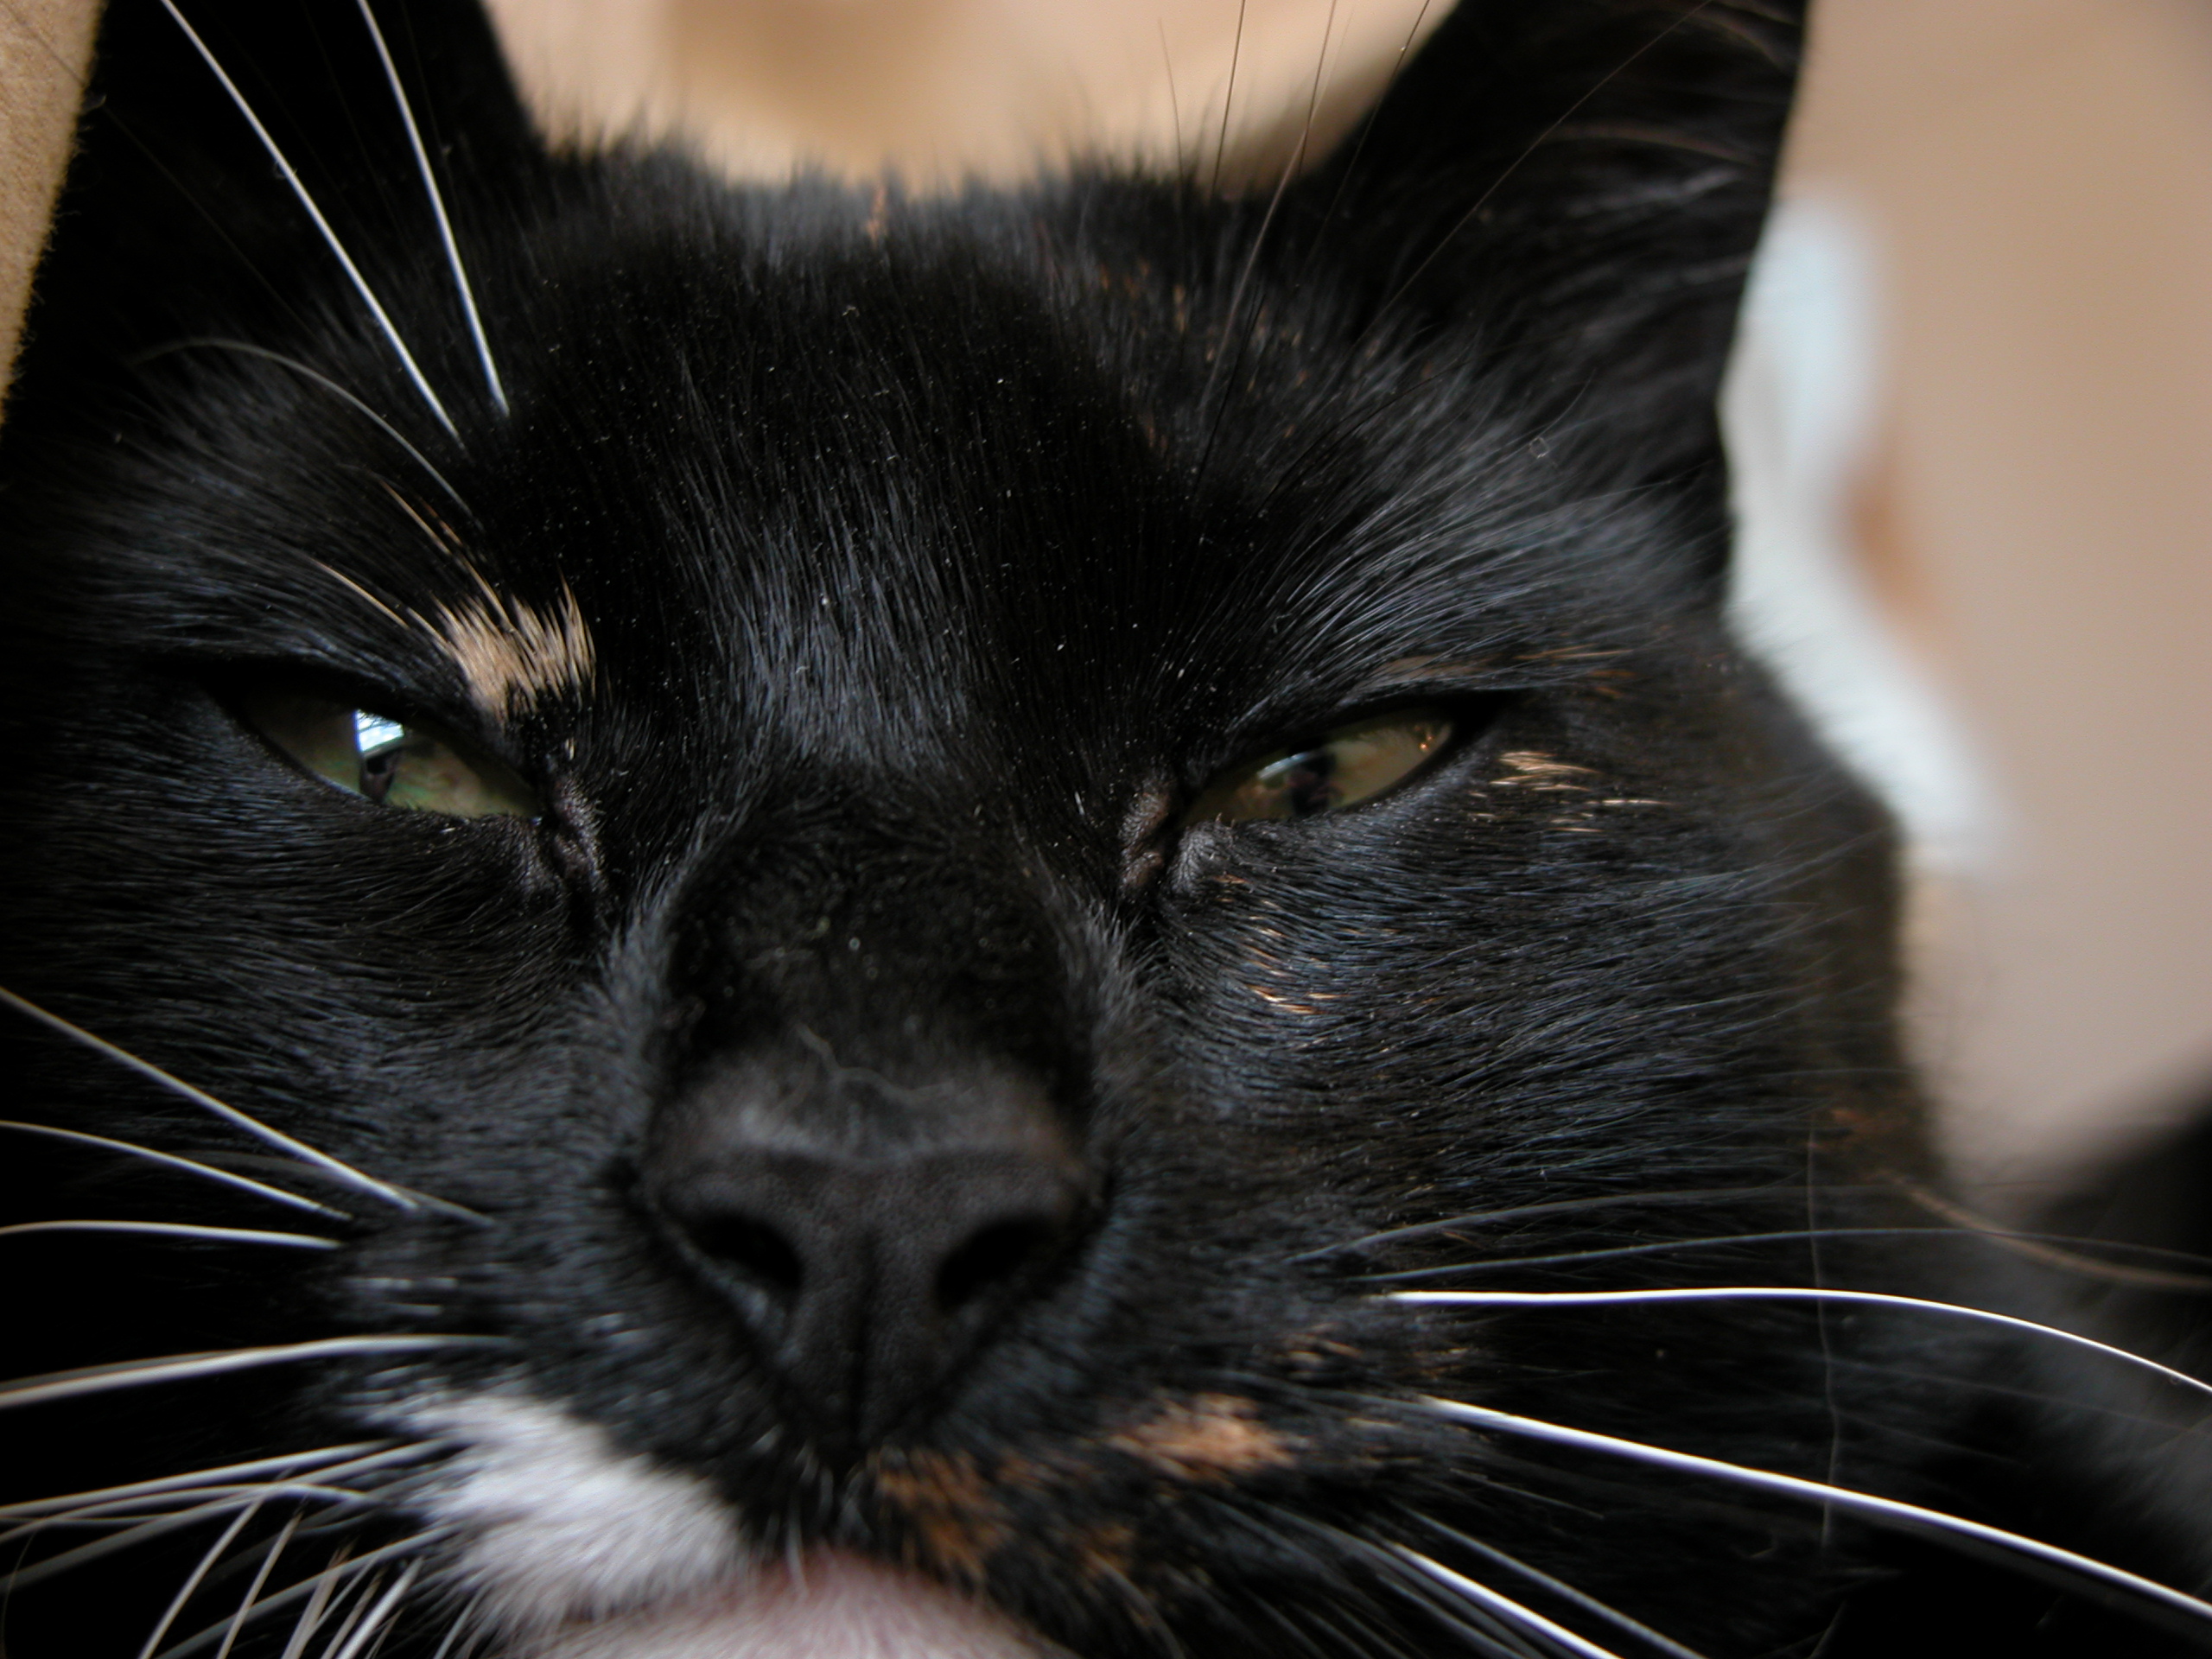 cat black and white cute nostrils ears lying relaxing sleeping eye eyes nose fur hairs